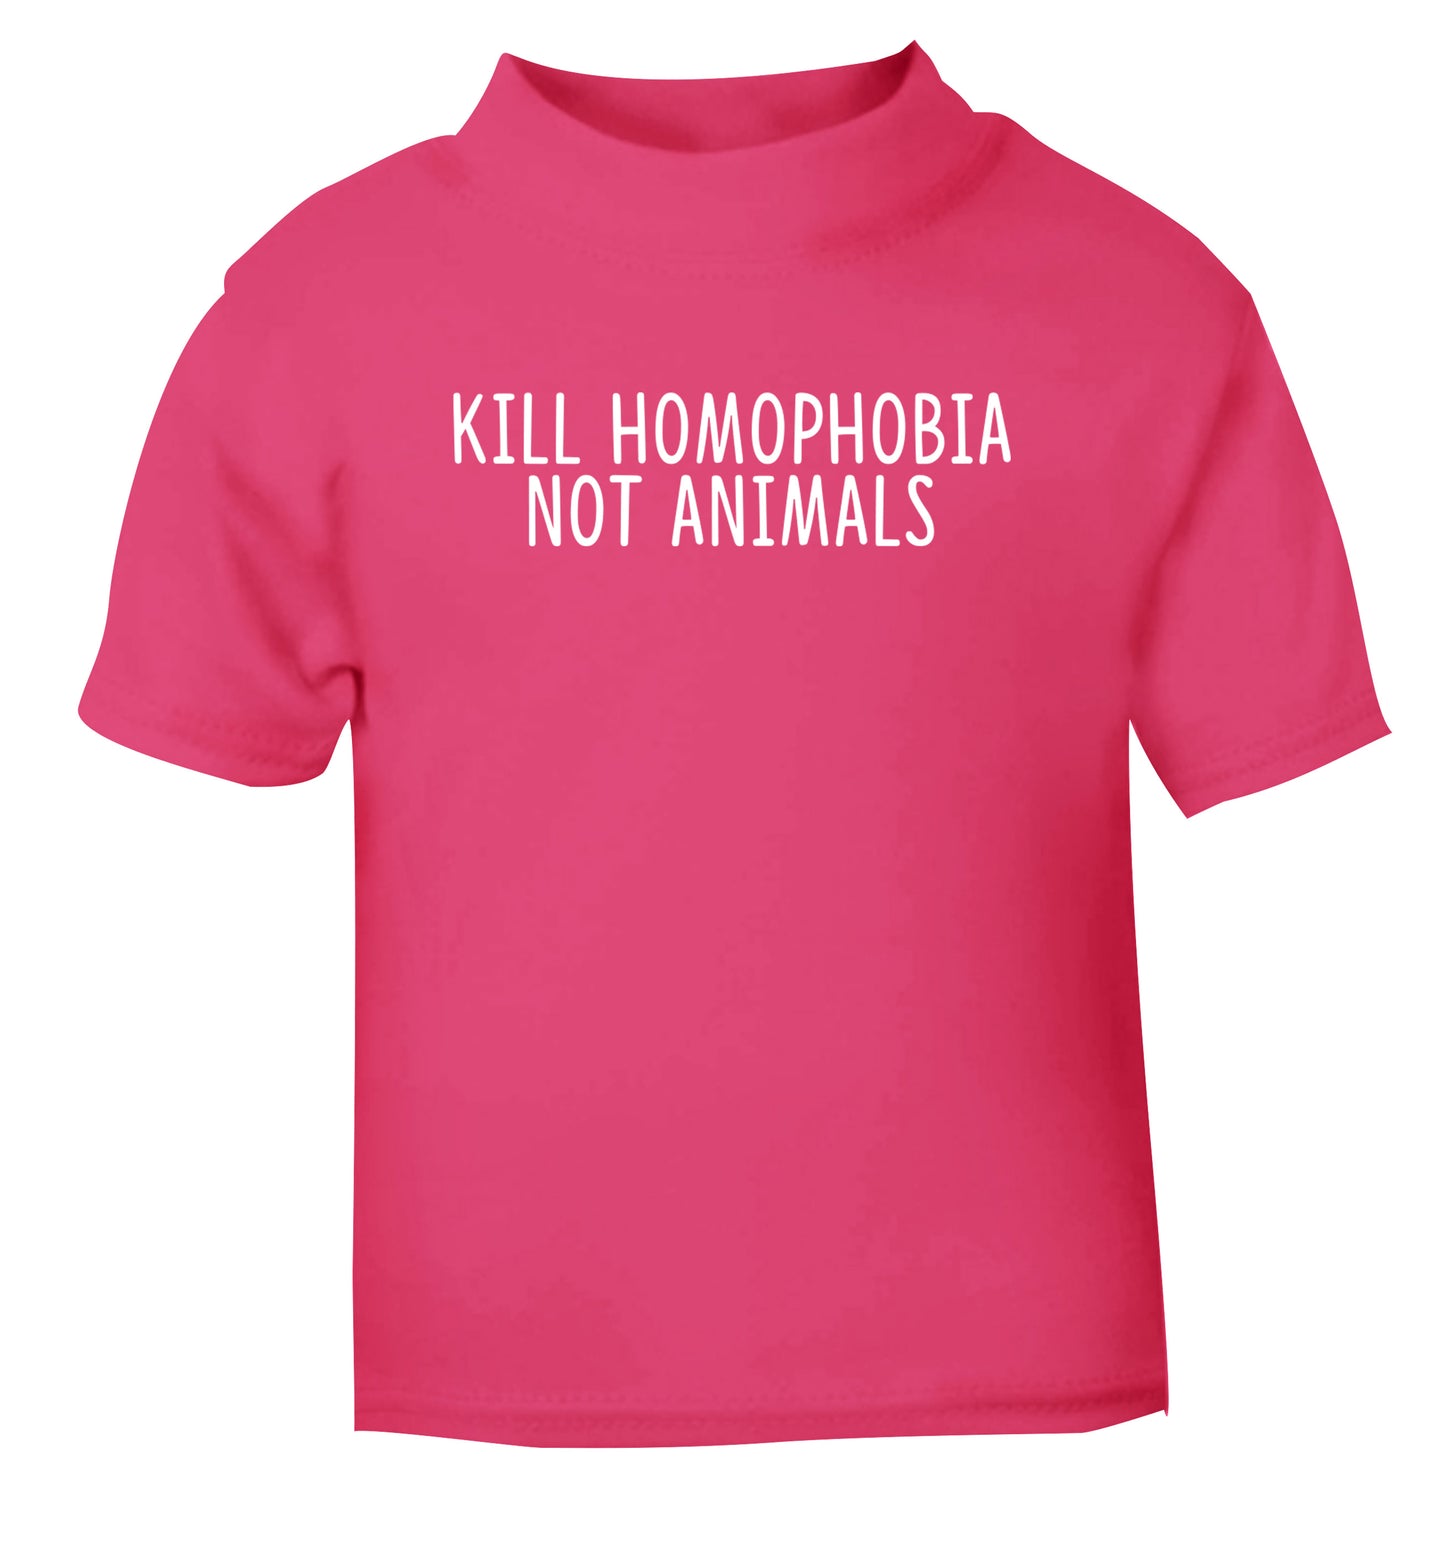 Kill Homophobia Not Animals pink Baby Toddler Tshirt 2 Years